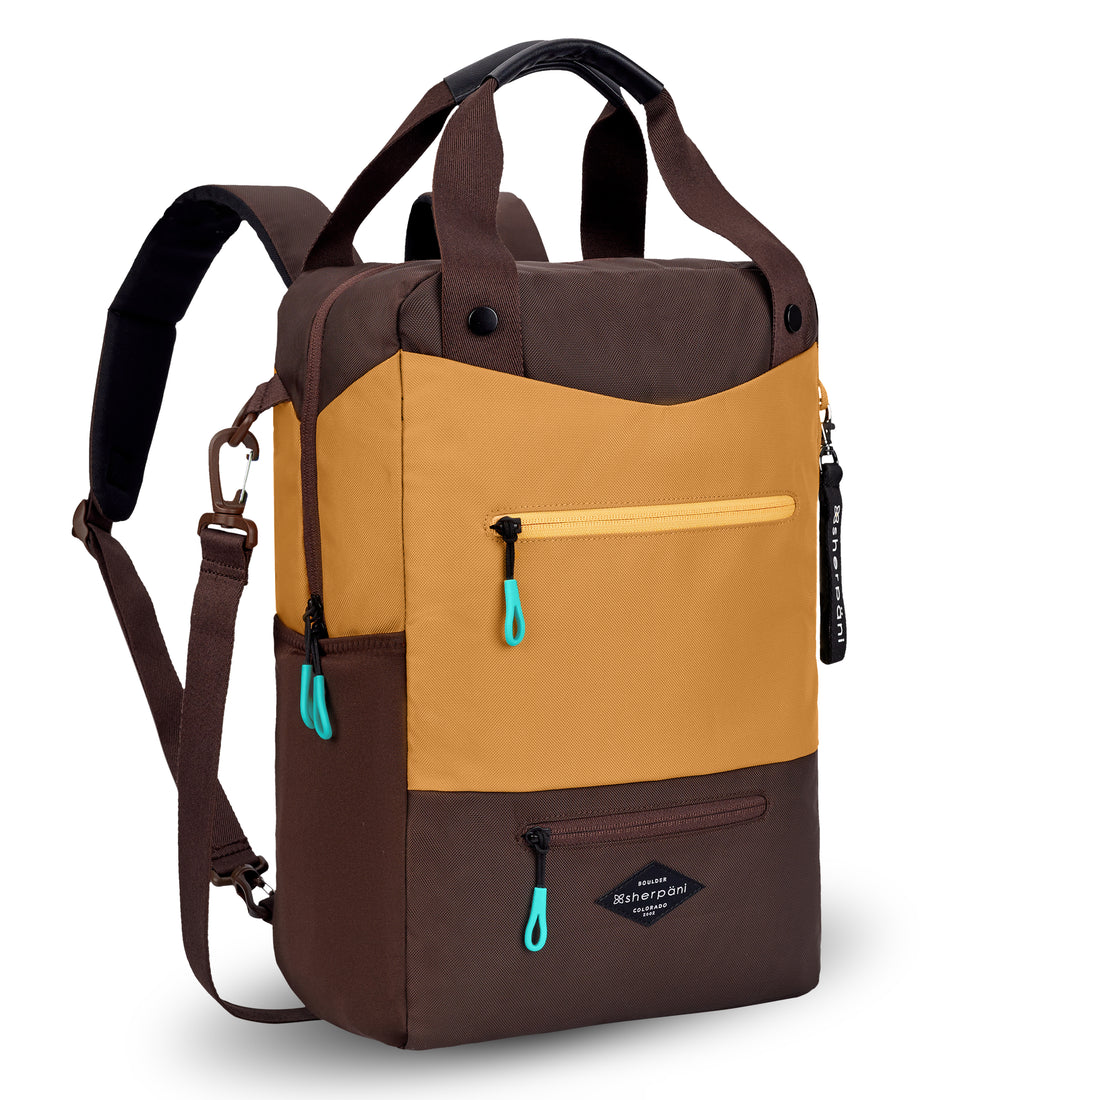 Sherpani Camden Convertible Backpack